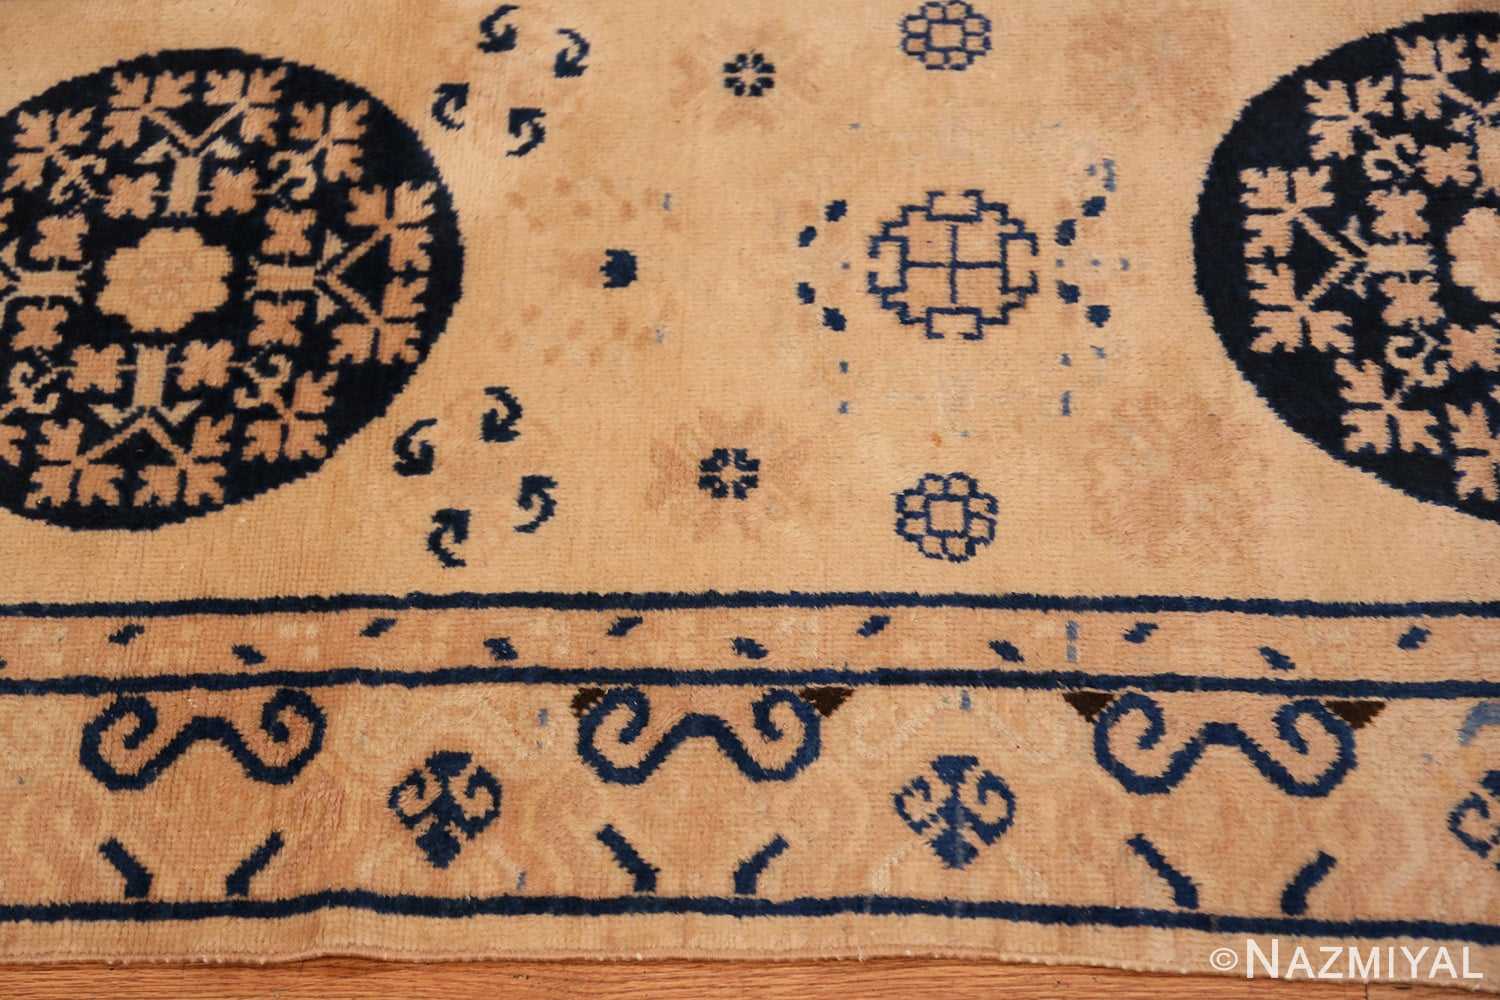 Border Decorative Ivory and Blue Antique Khotan runner rug 42193 by Nazmiyal